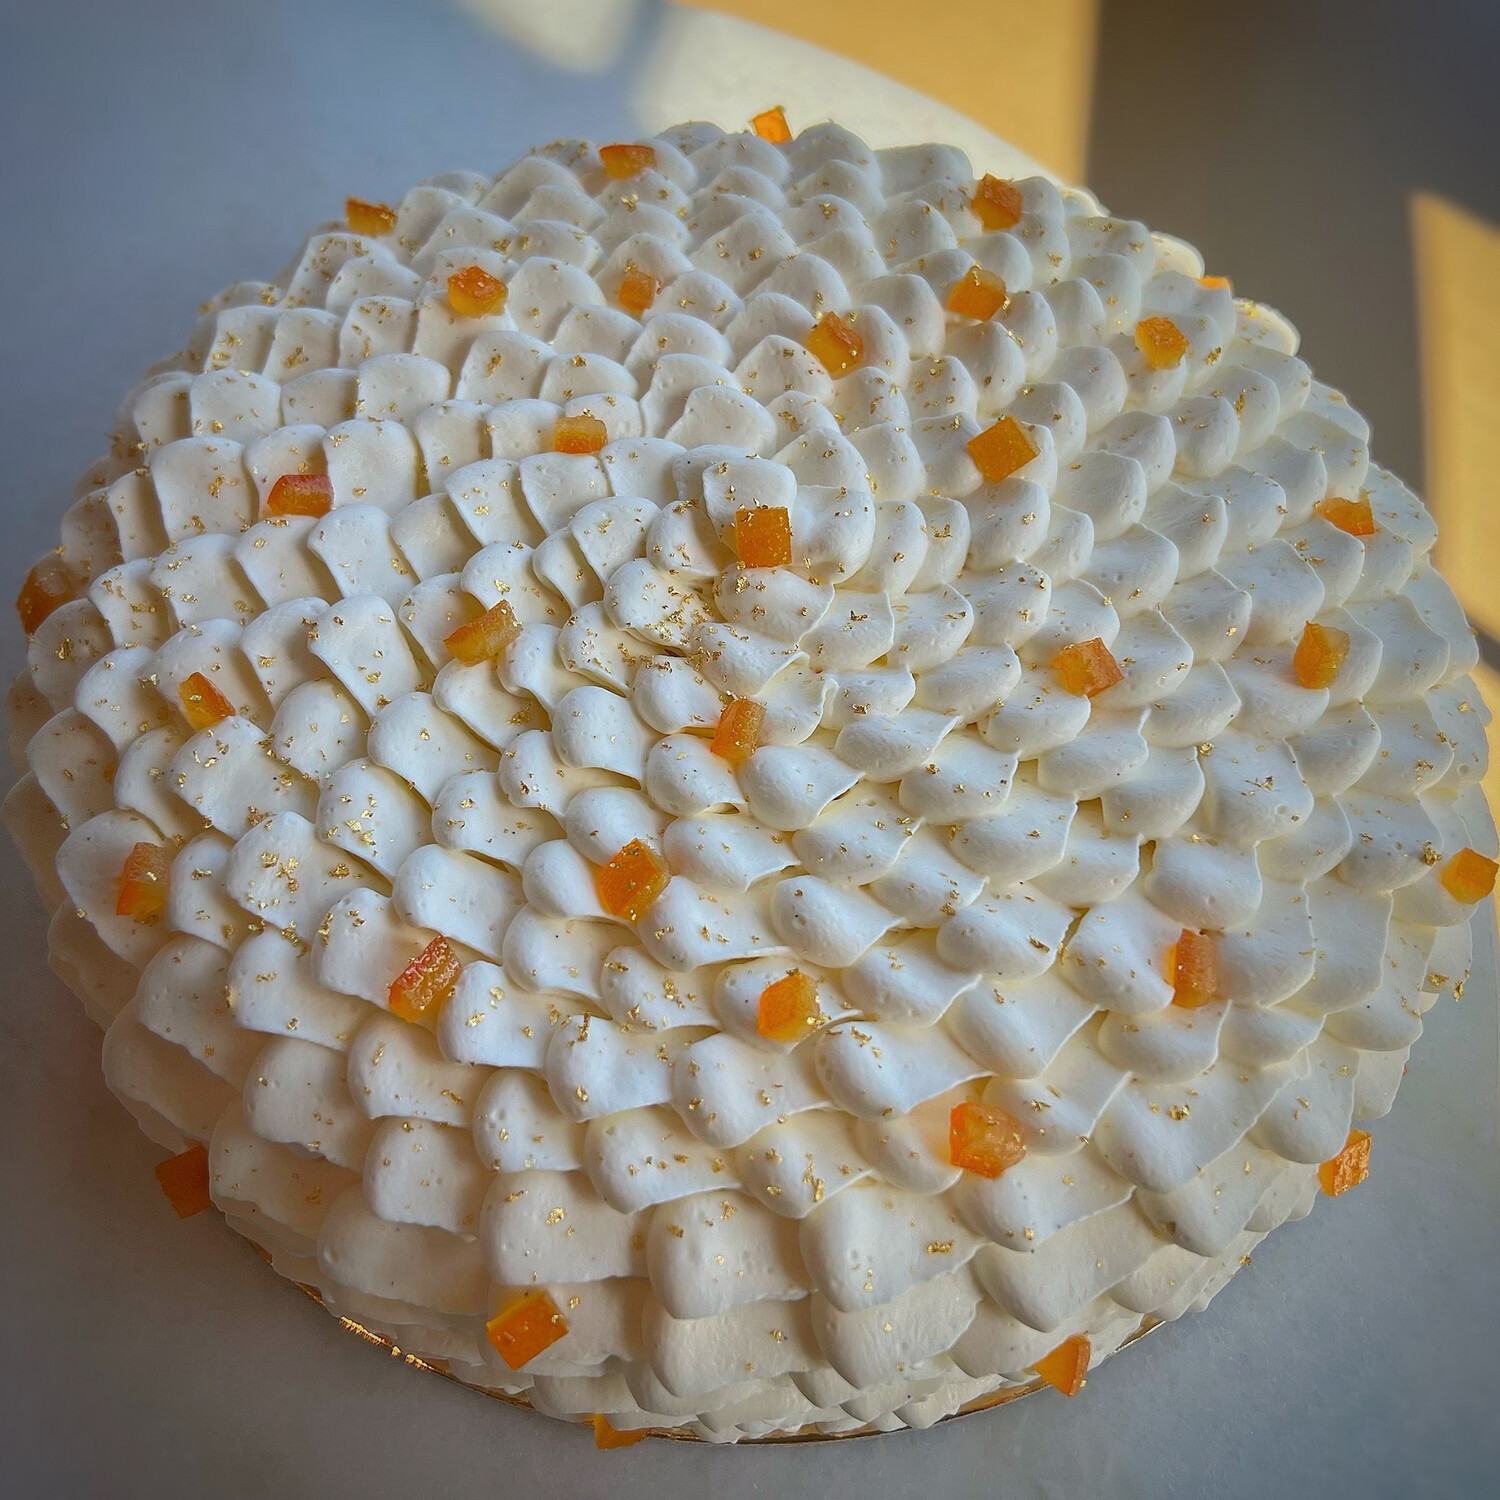 EASTER 23 lemon basque cheesecake, 9” cake